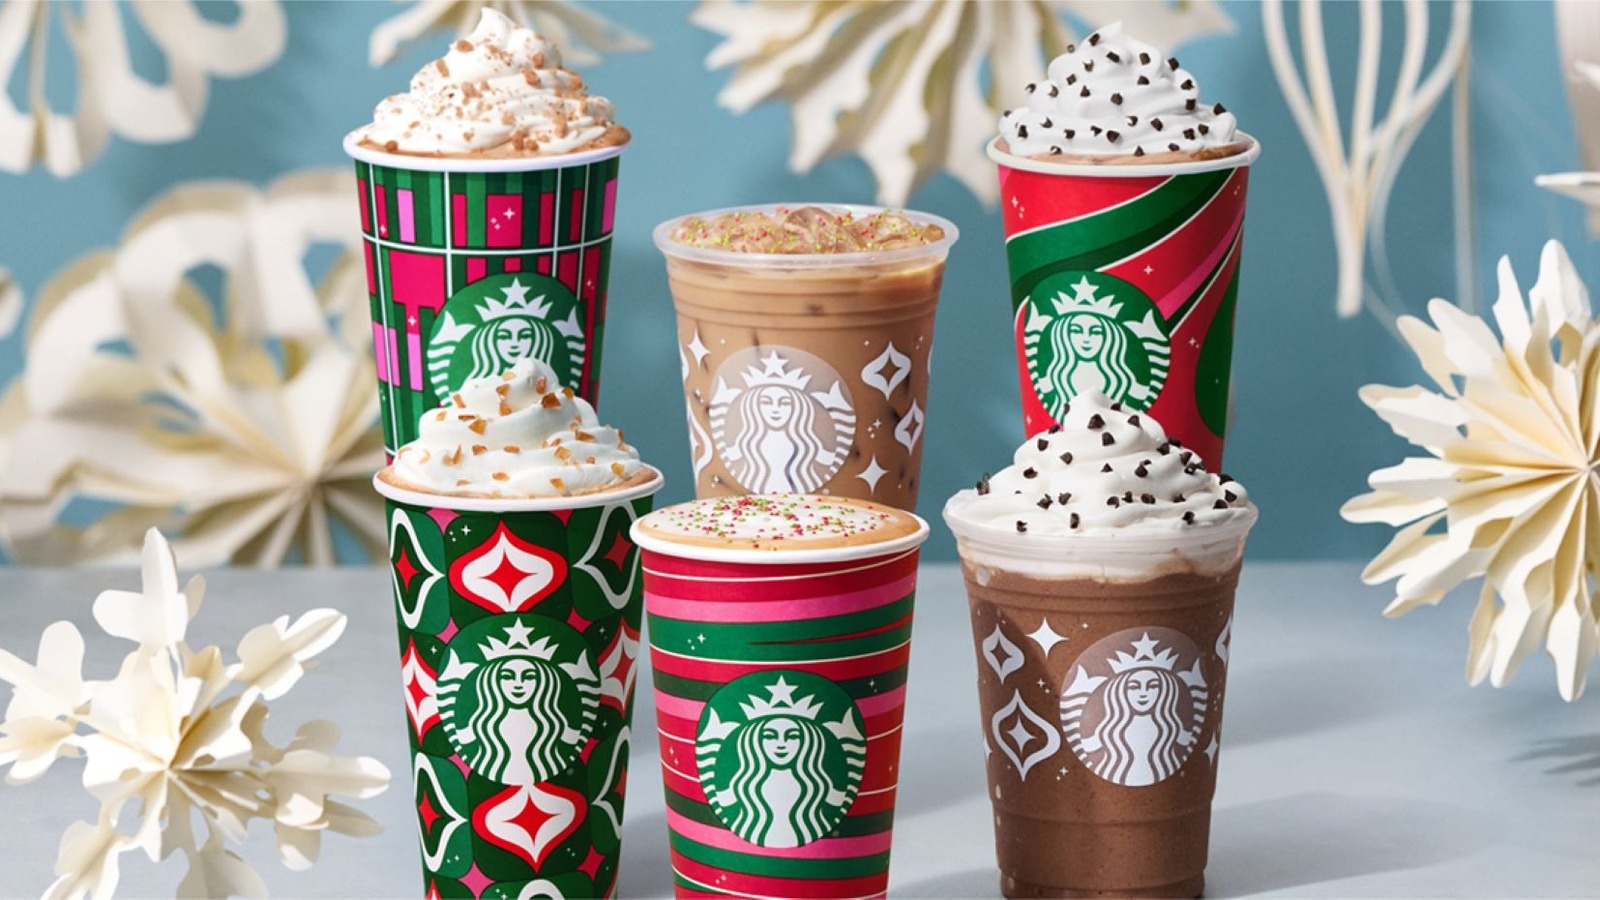 Starbucks shares a sneak peek of covetable gifts for 2019 holiday season -  Starbucks Stories